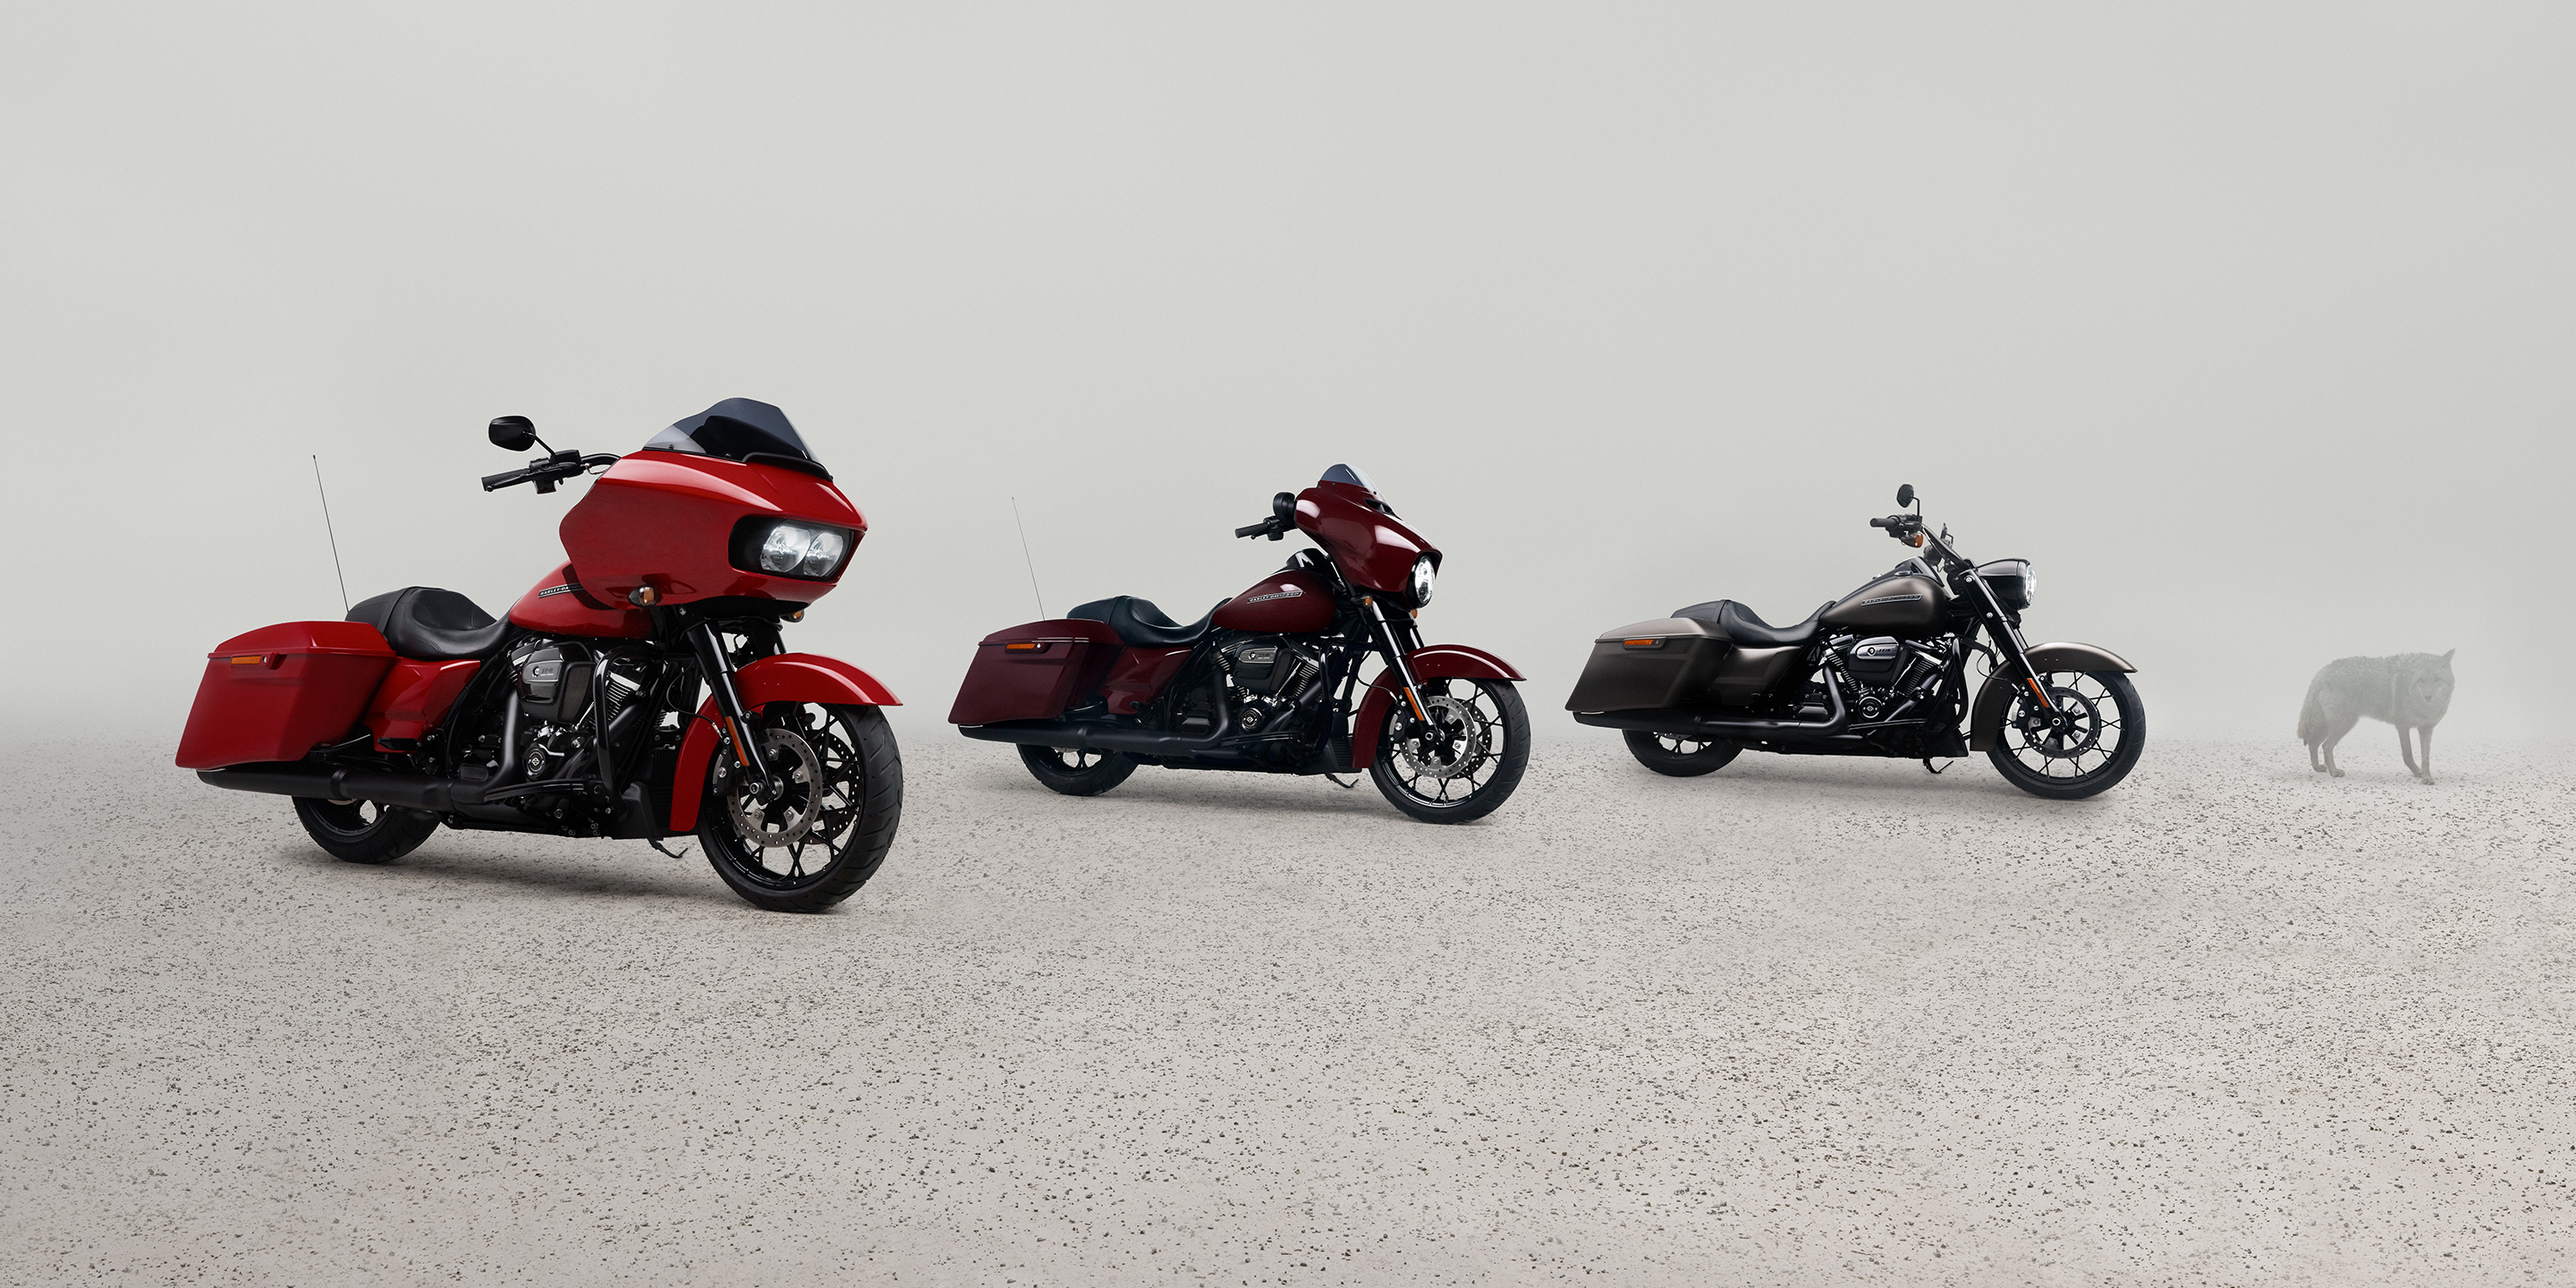  2020 Touring Motorcycles Harley Davidson India